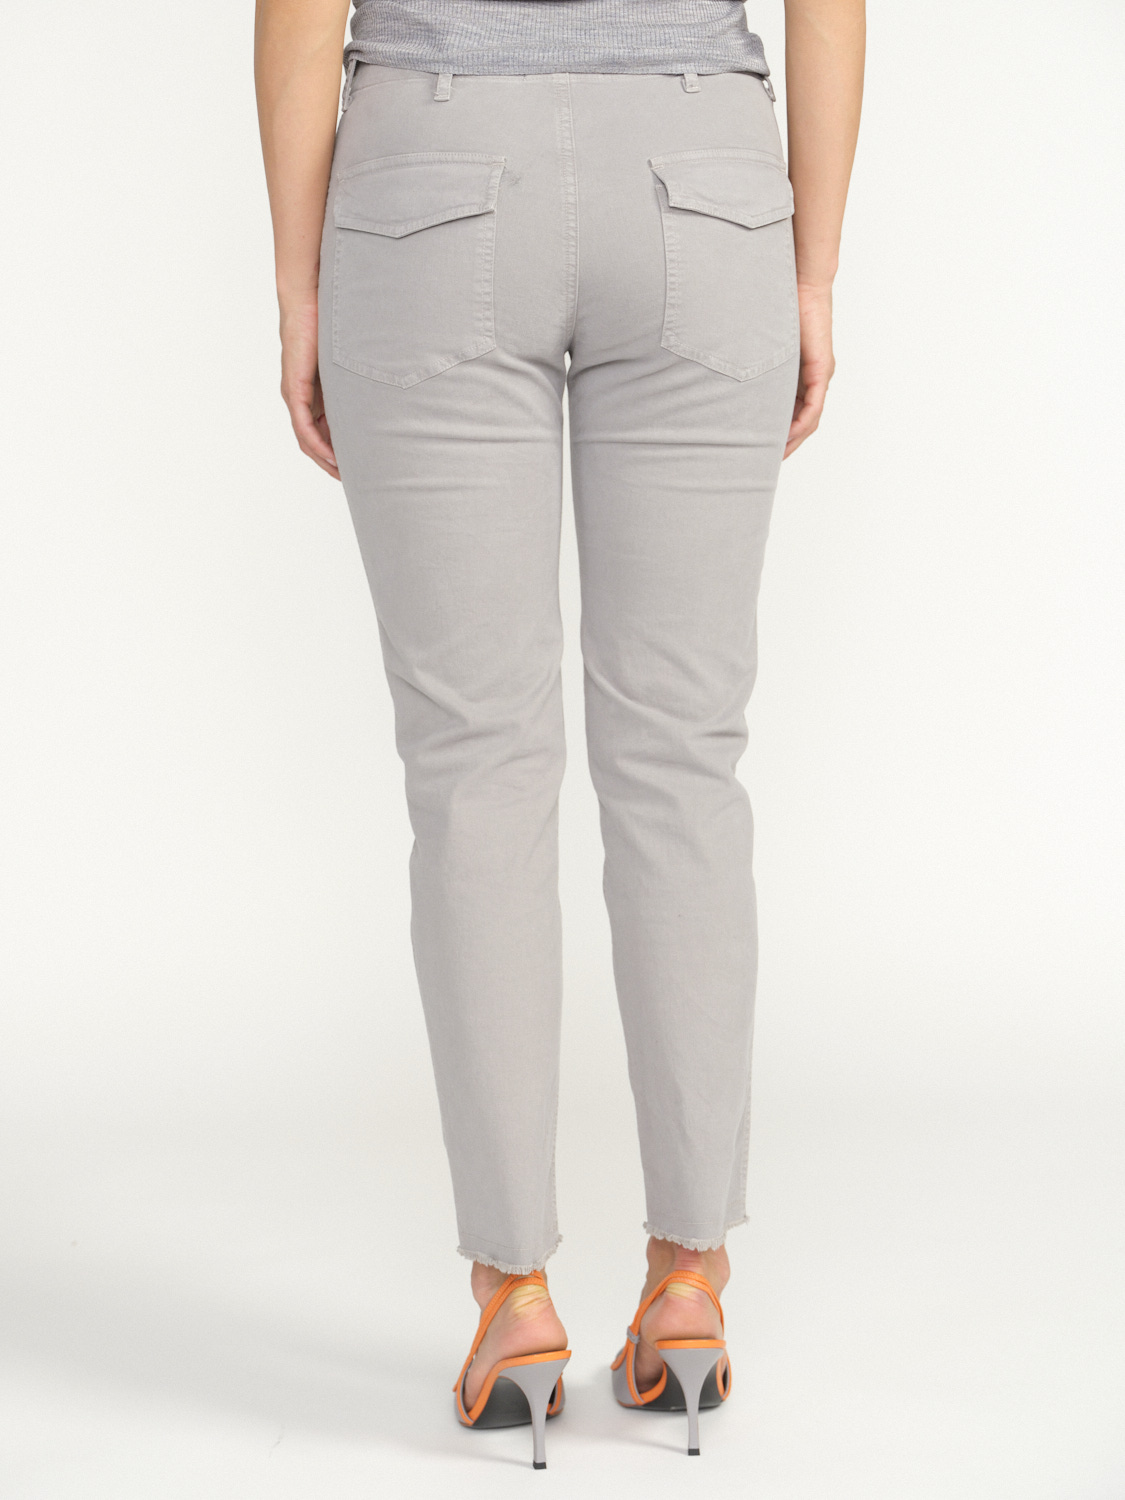 Nili Lotan Jenna Pant - pantalón con grandes bolsillos abiertos  gris 34